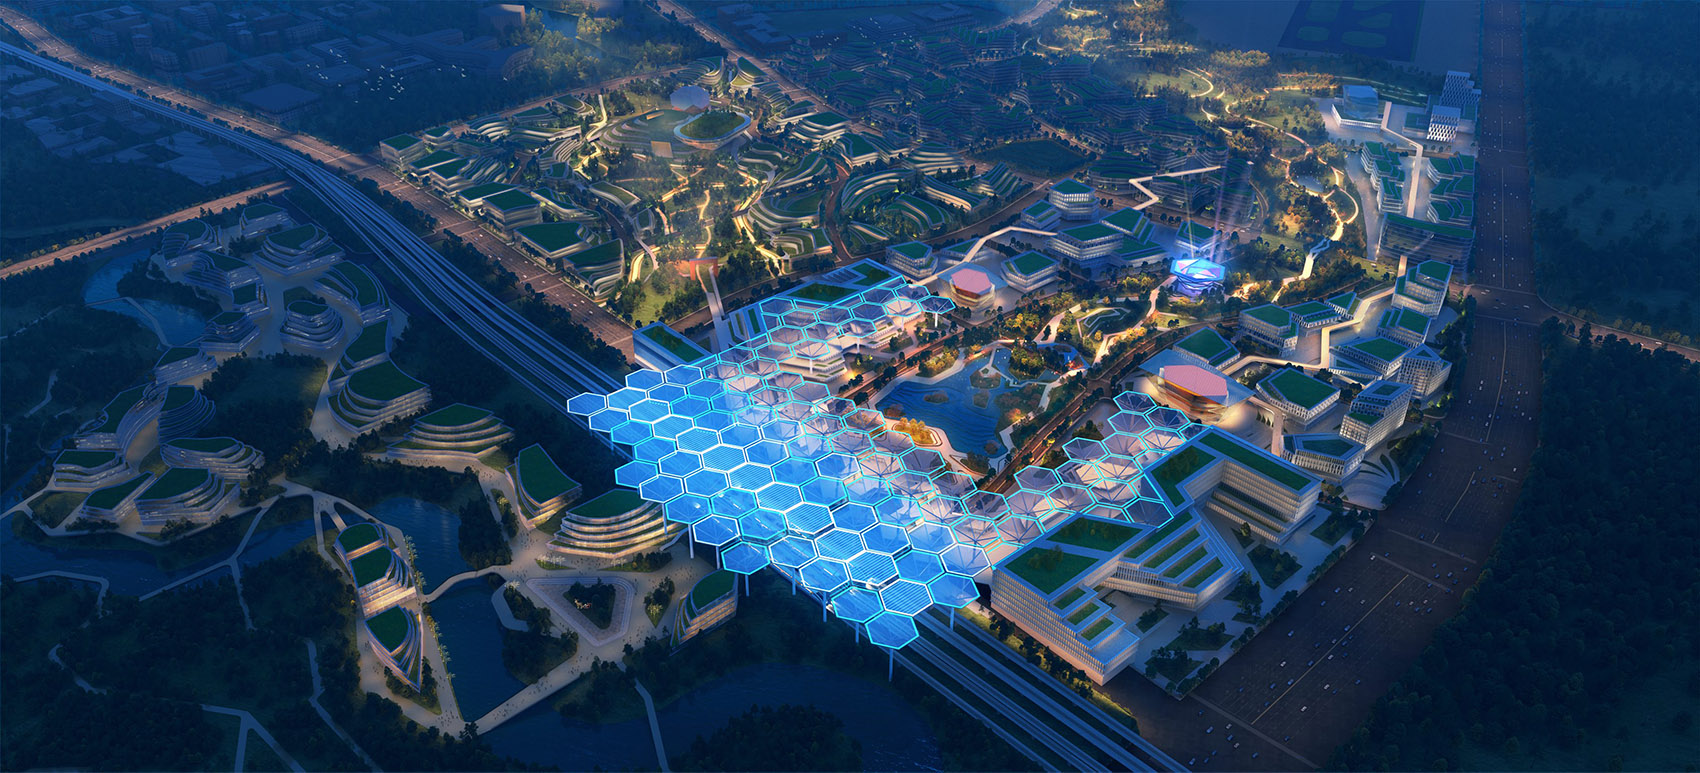 Chengdu Future City gmp wins competition for new hightech development